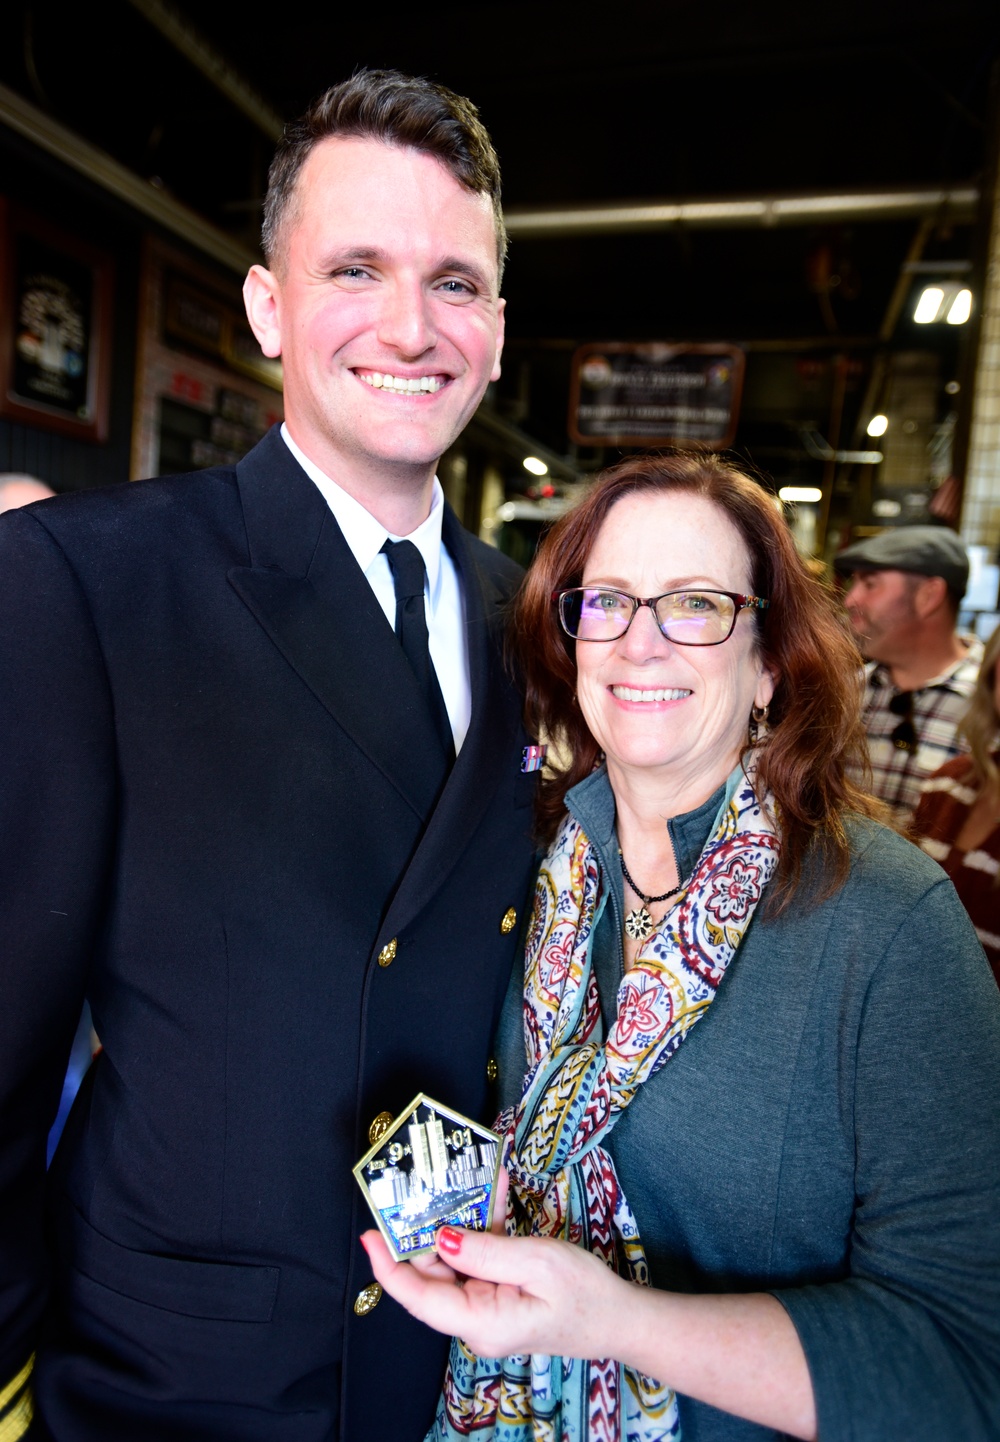 USS Arlington honors Firehouses and Firemen in Veterans Week